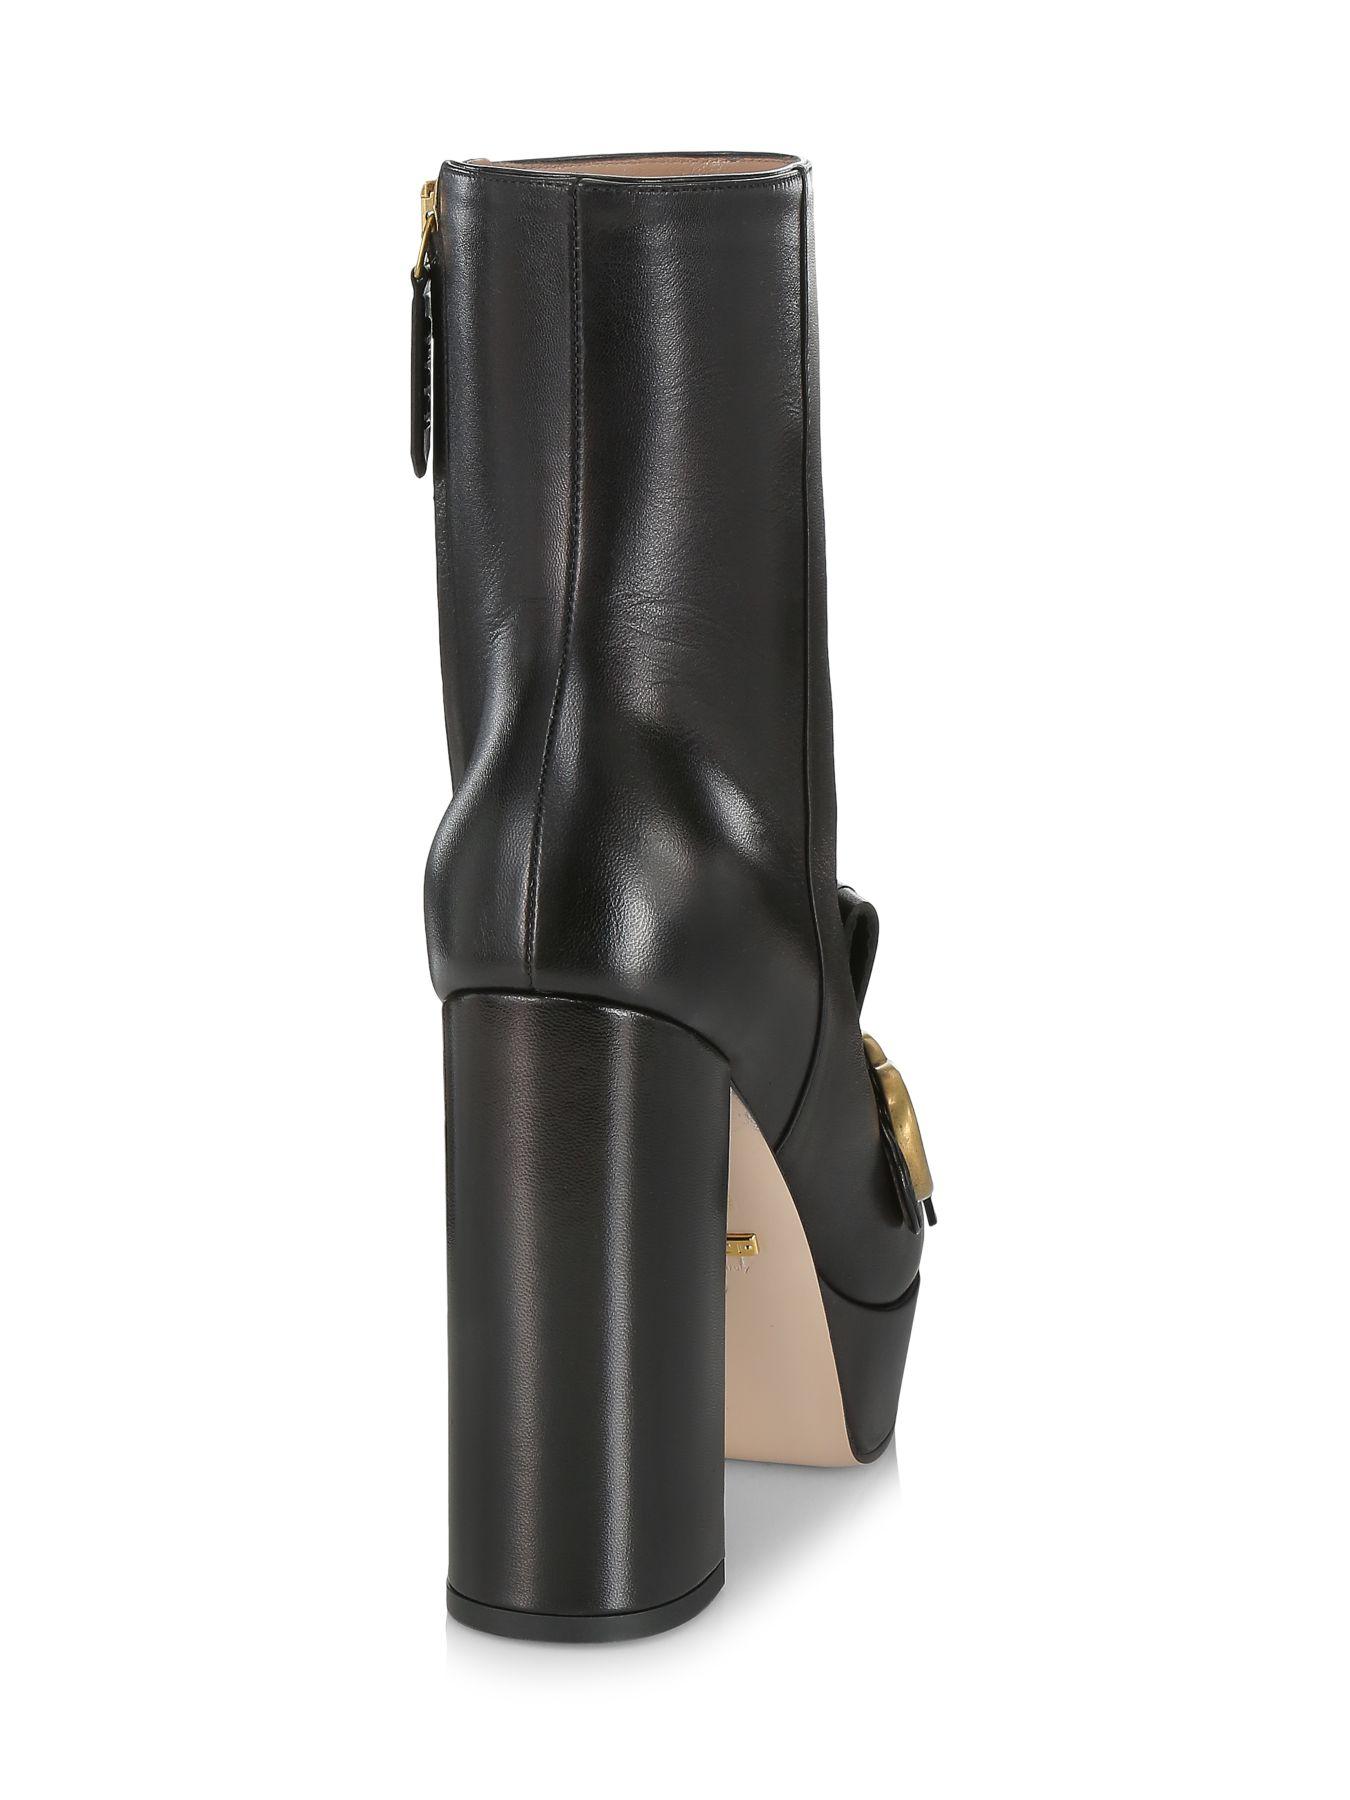 Gucci Fringe Leather Platform Boot in Black | Lyst